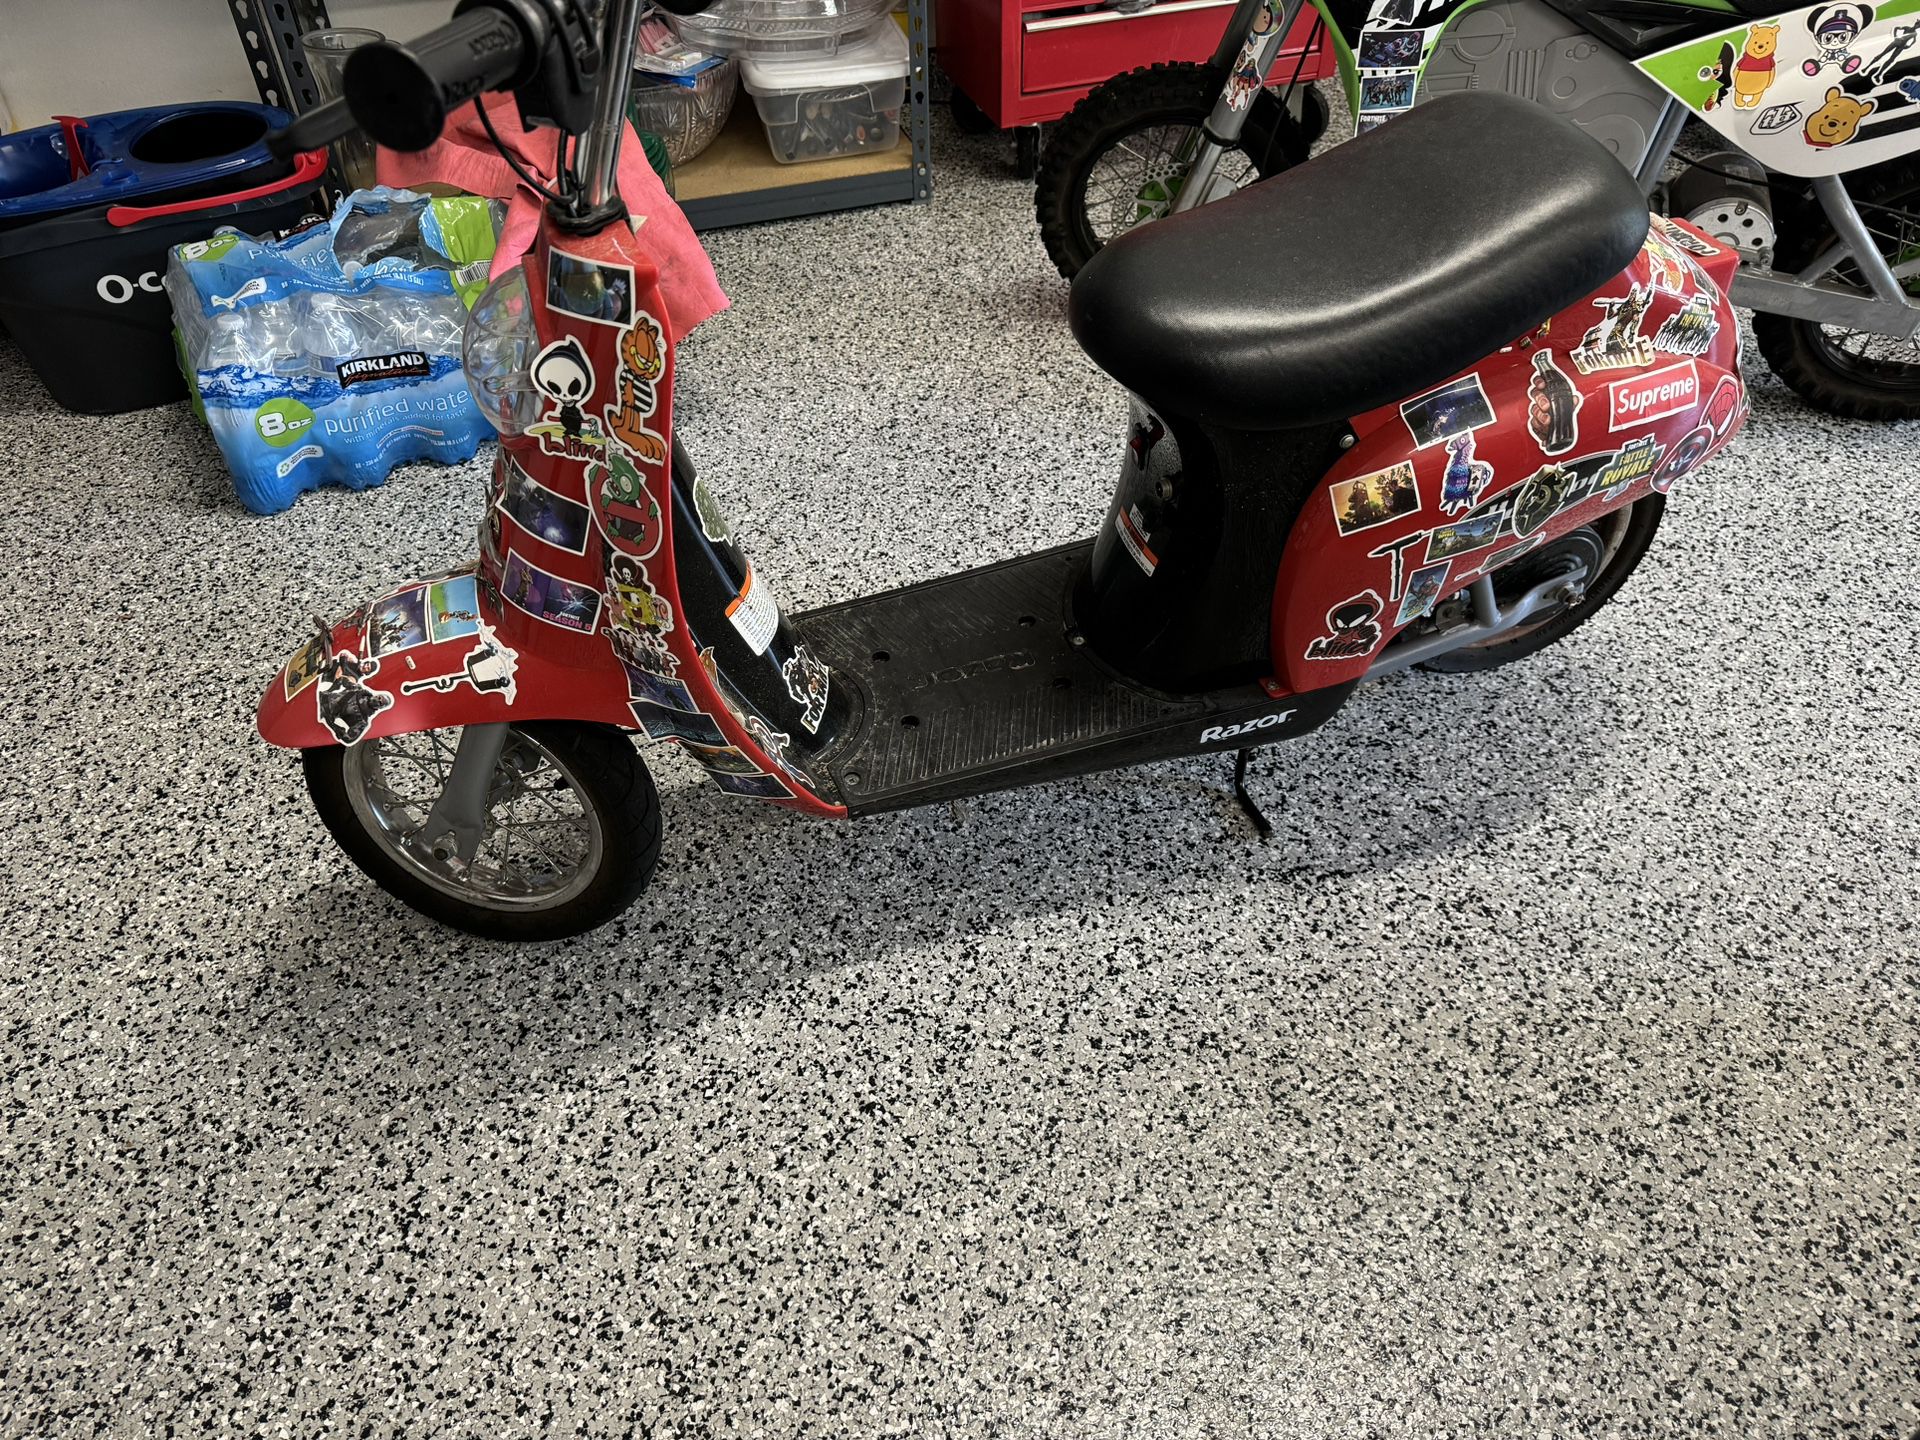 Razor moped (Needs A Battery) 